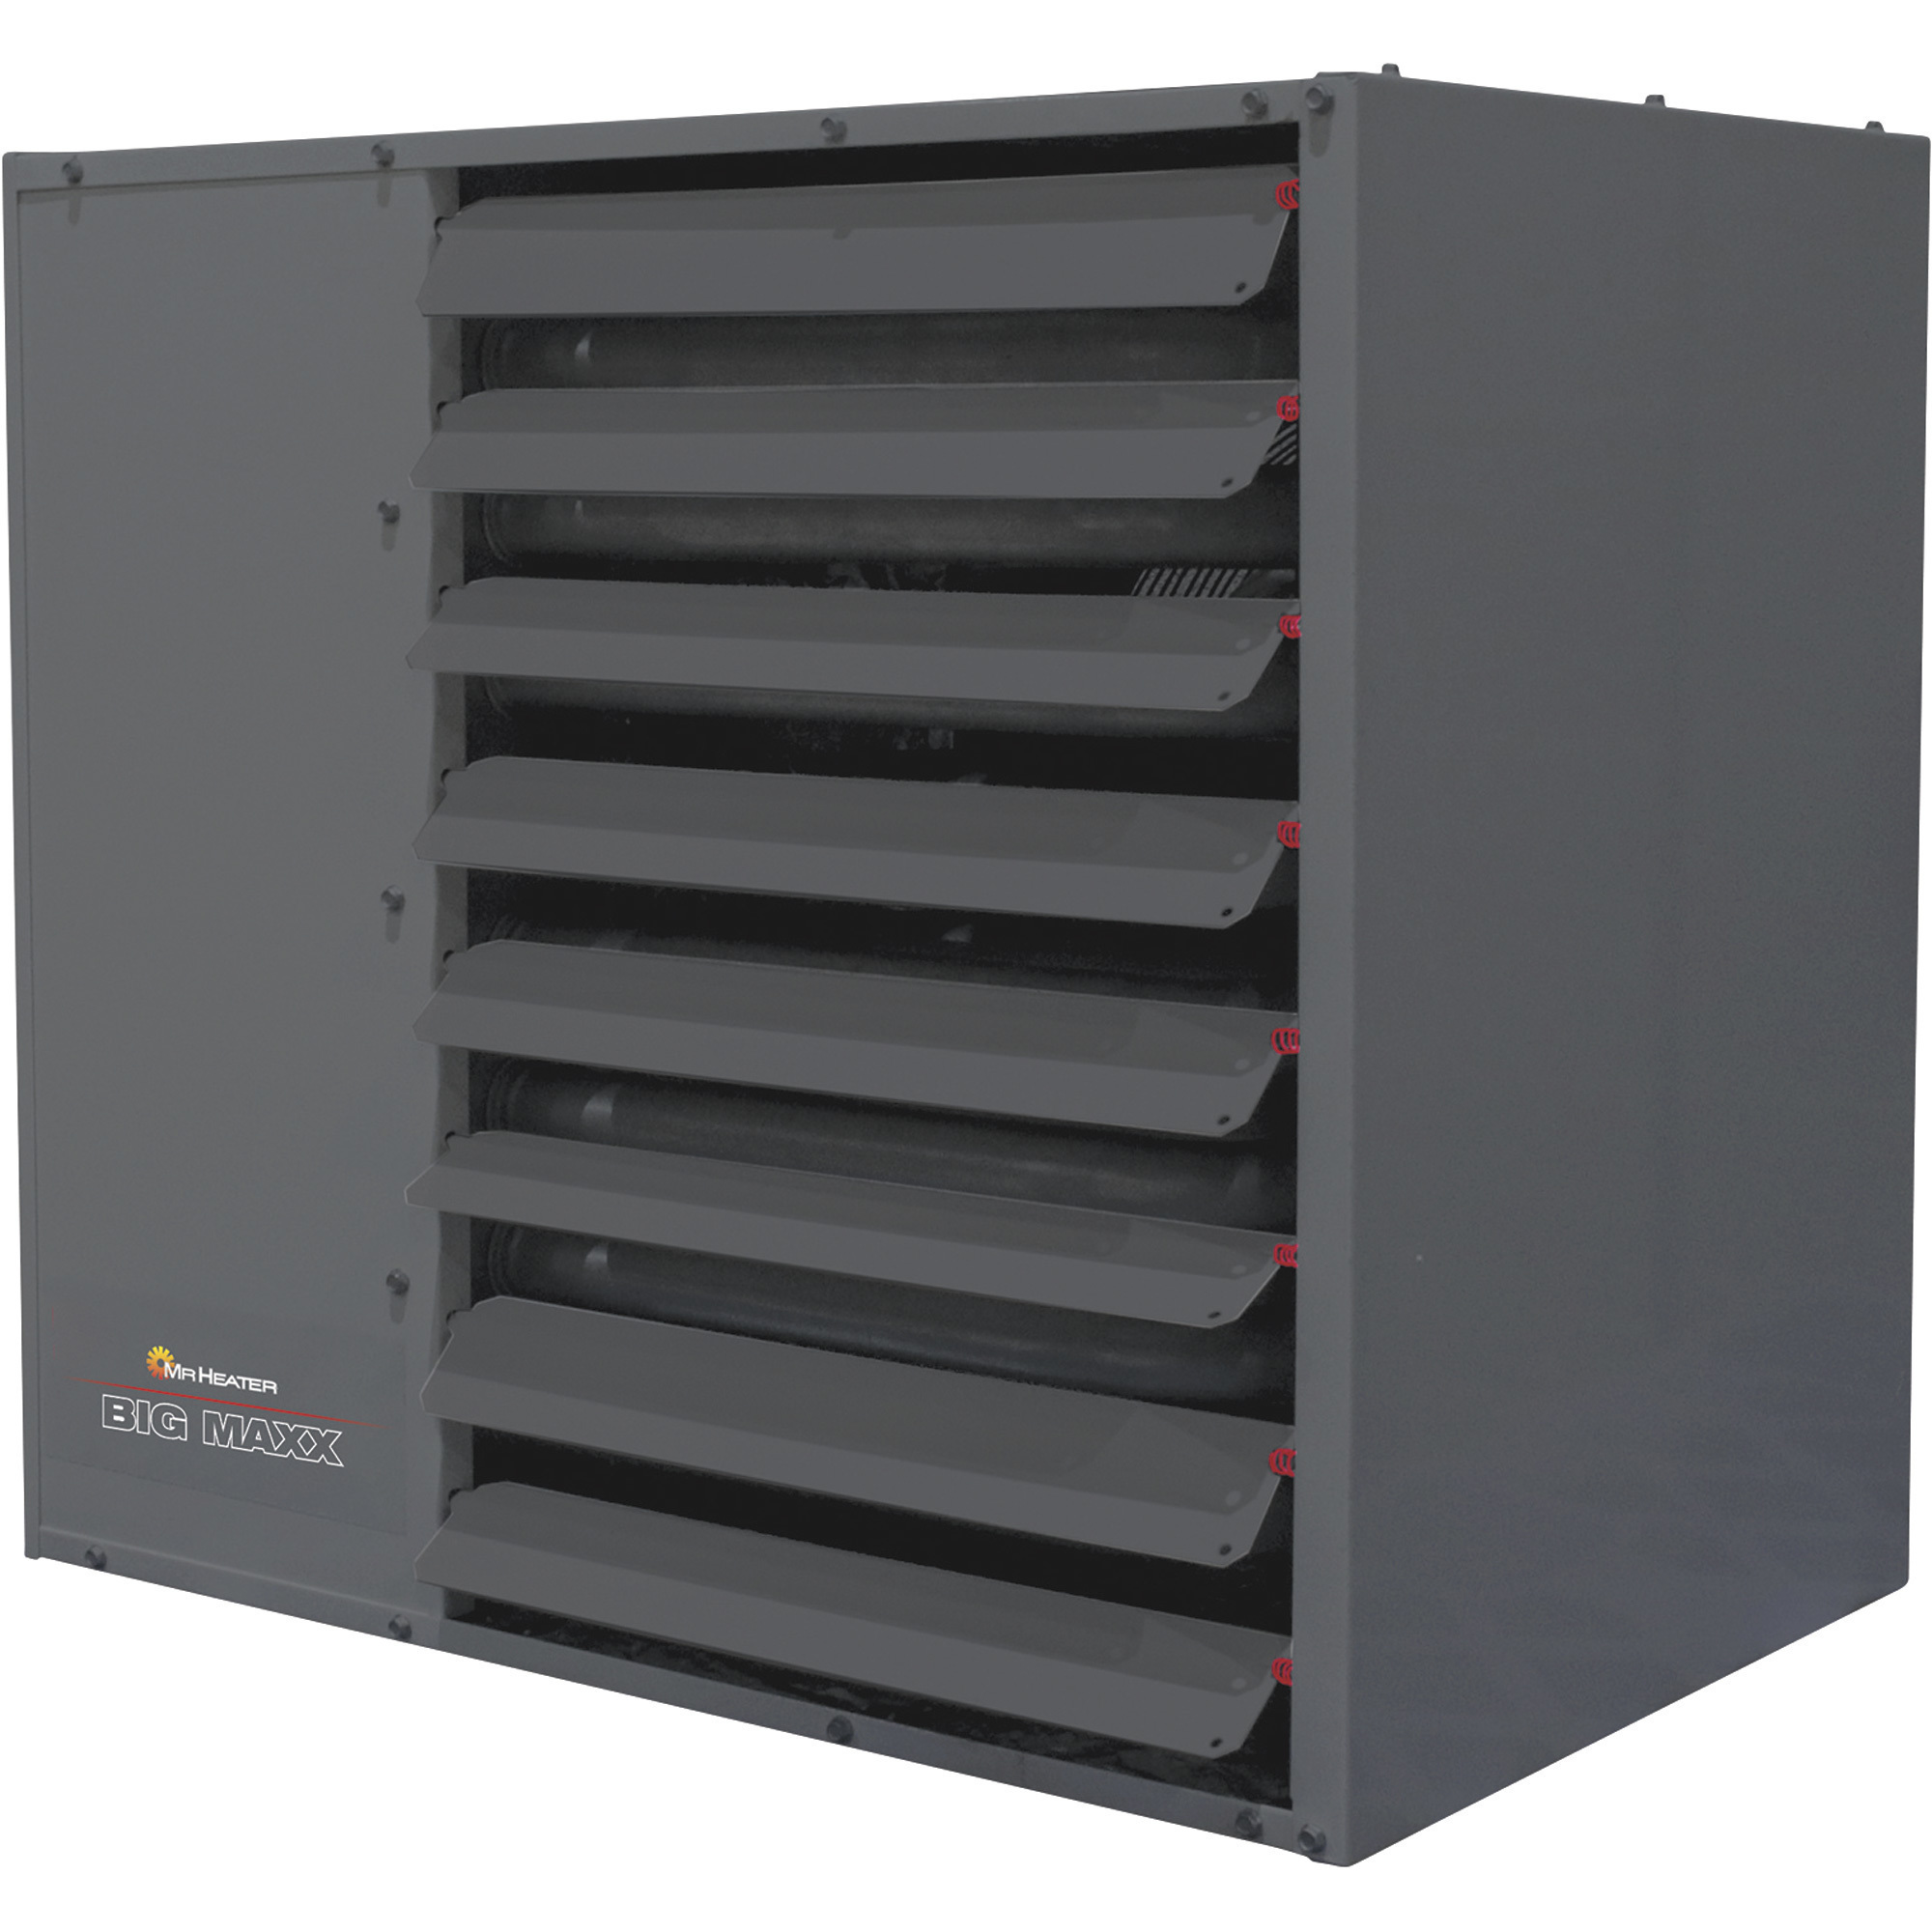 Mr. Heater Big Maxx 400,000 BTU Natural Gas/LP High-Output Commercial Unit Heater — Model# MHU400 -  F263066